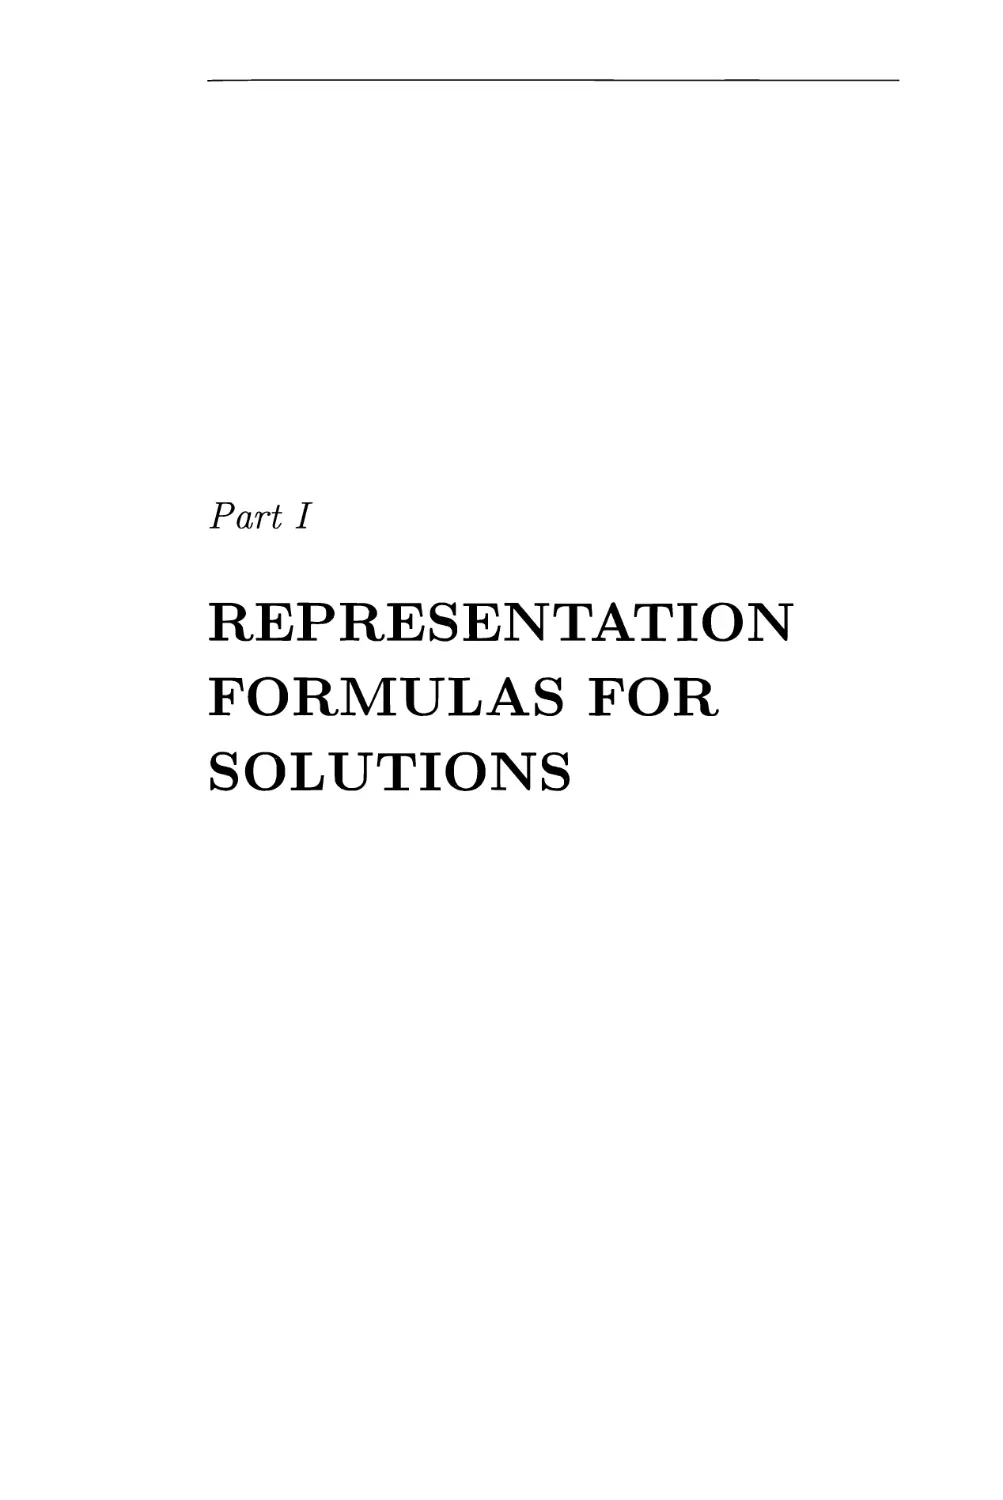 PART I: REPRESENTATION FORMULAS FOR SOLUTIONS